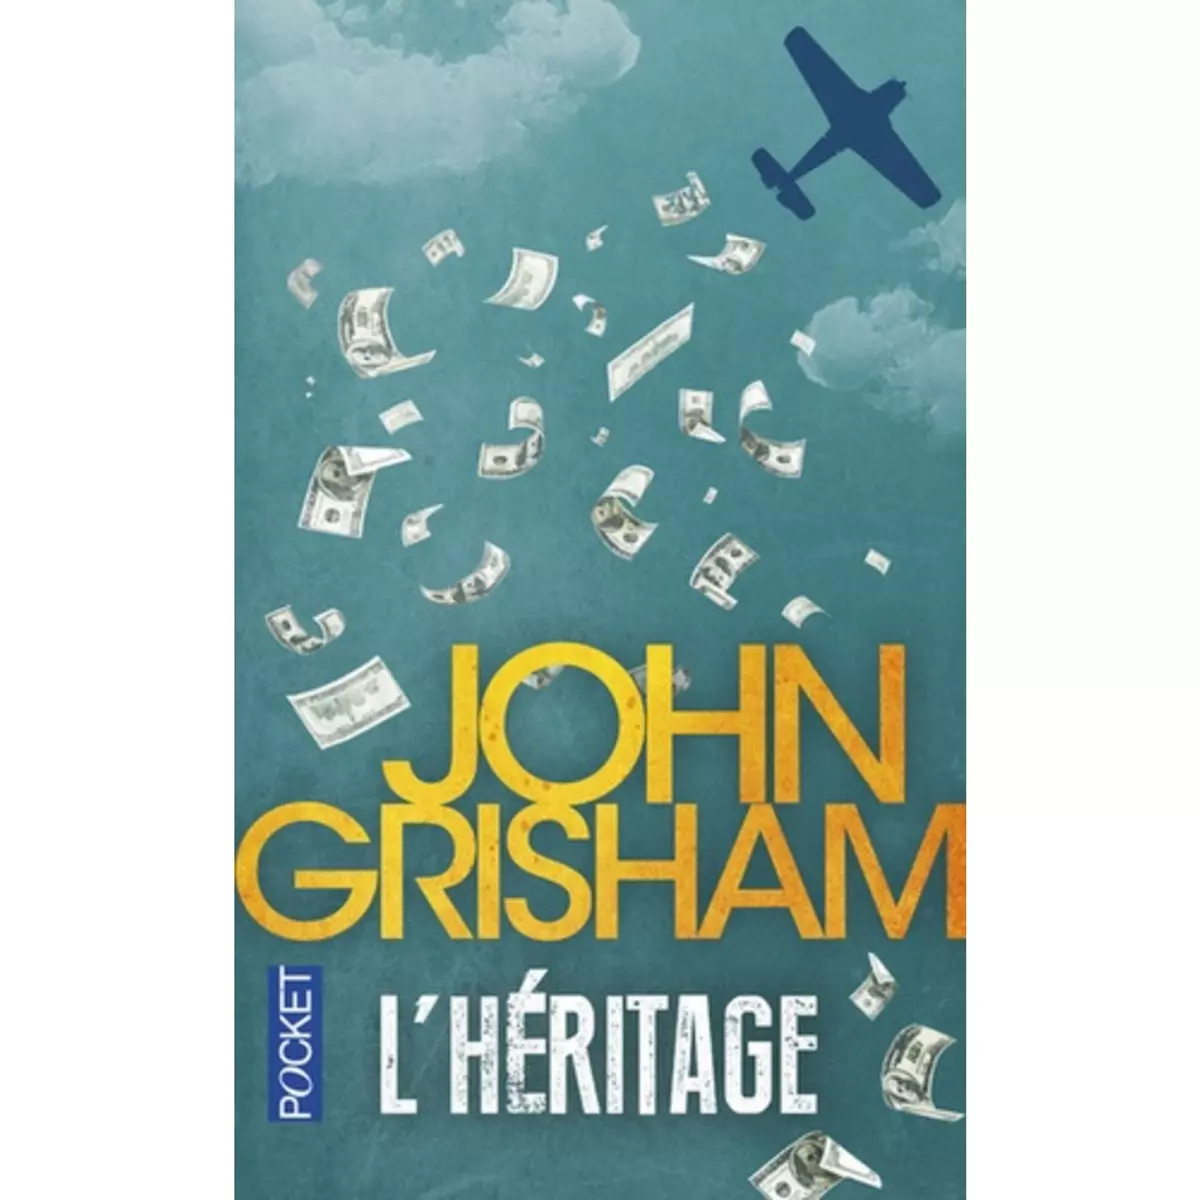  L'HERITAGE, Grisham John